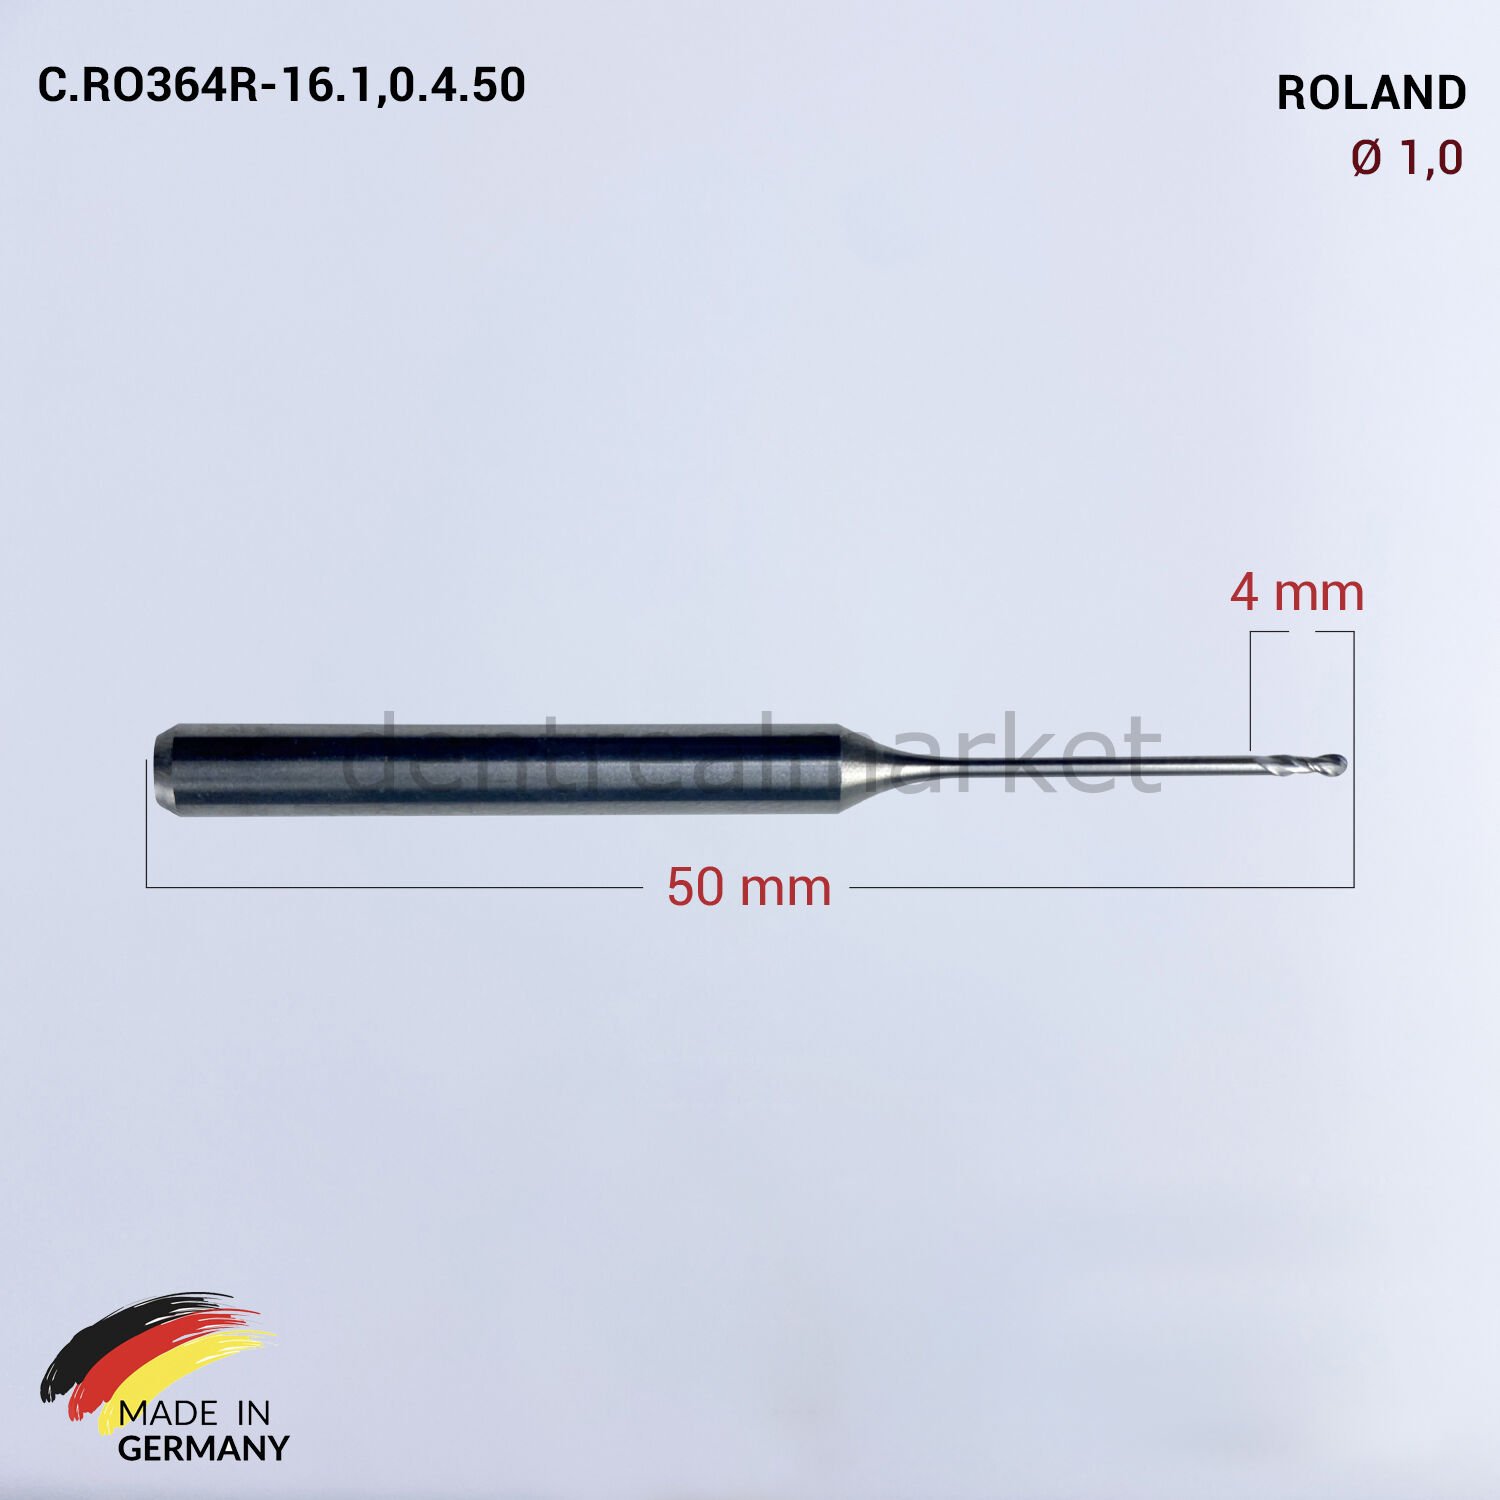 Tungusten Milling Makine Frezi 1,0 mm - Roland için